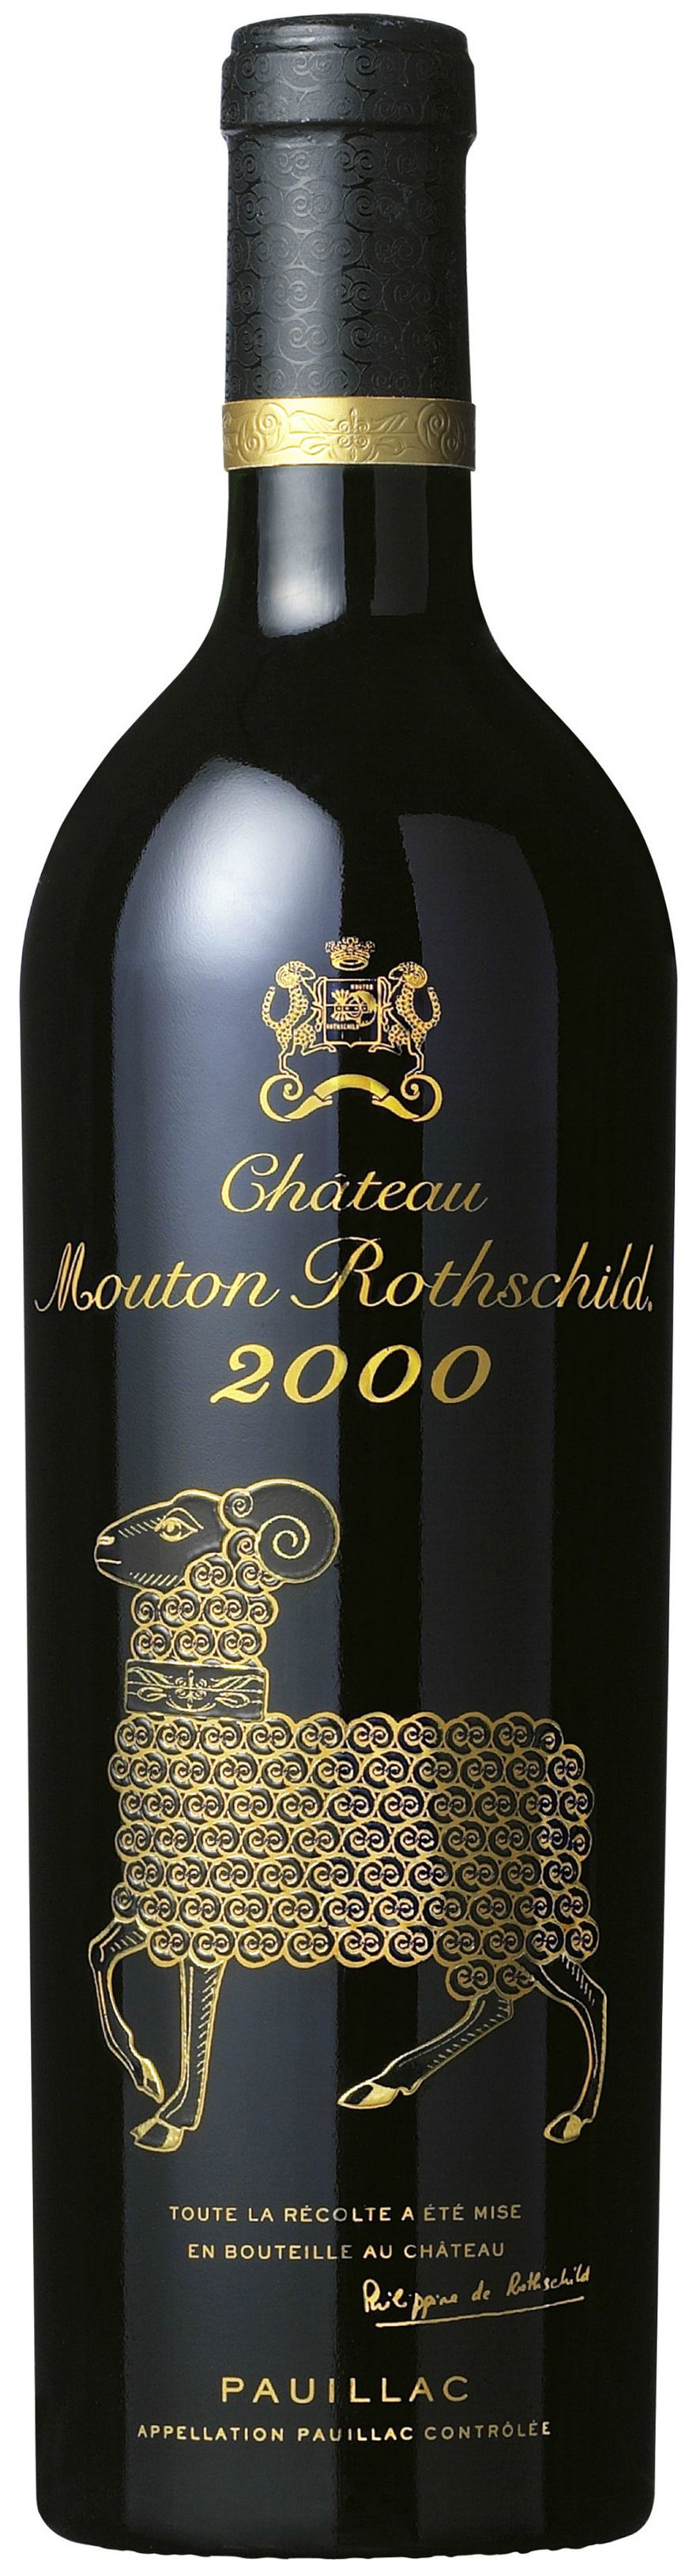 Chateau Mouton Rothschild, Premier Cru Classe, 2000